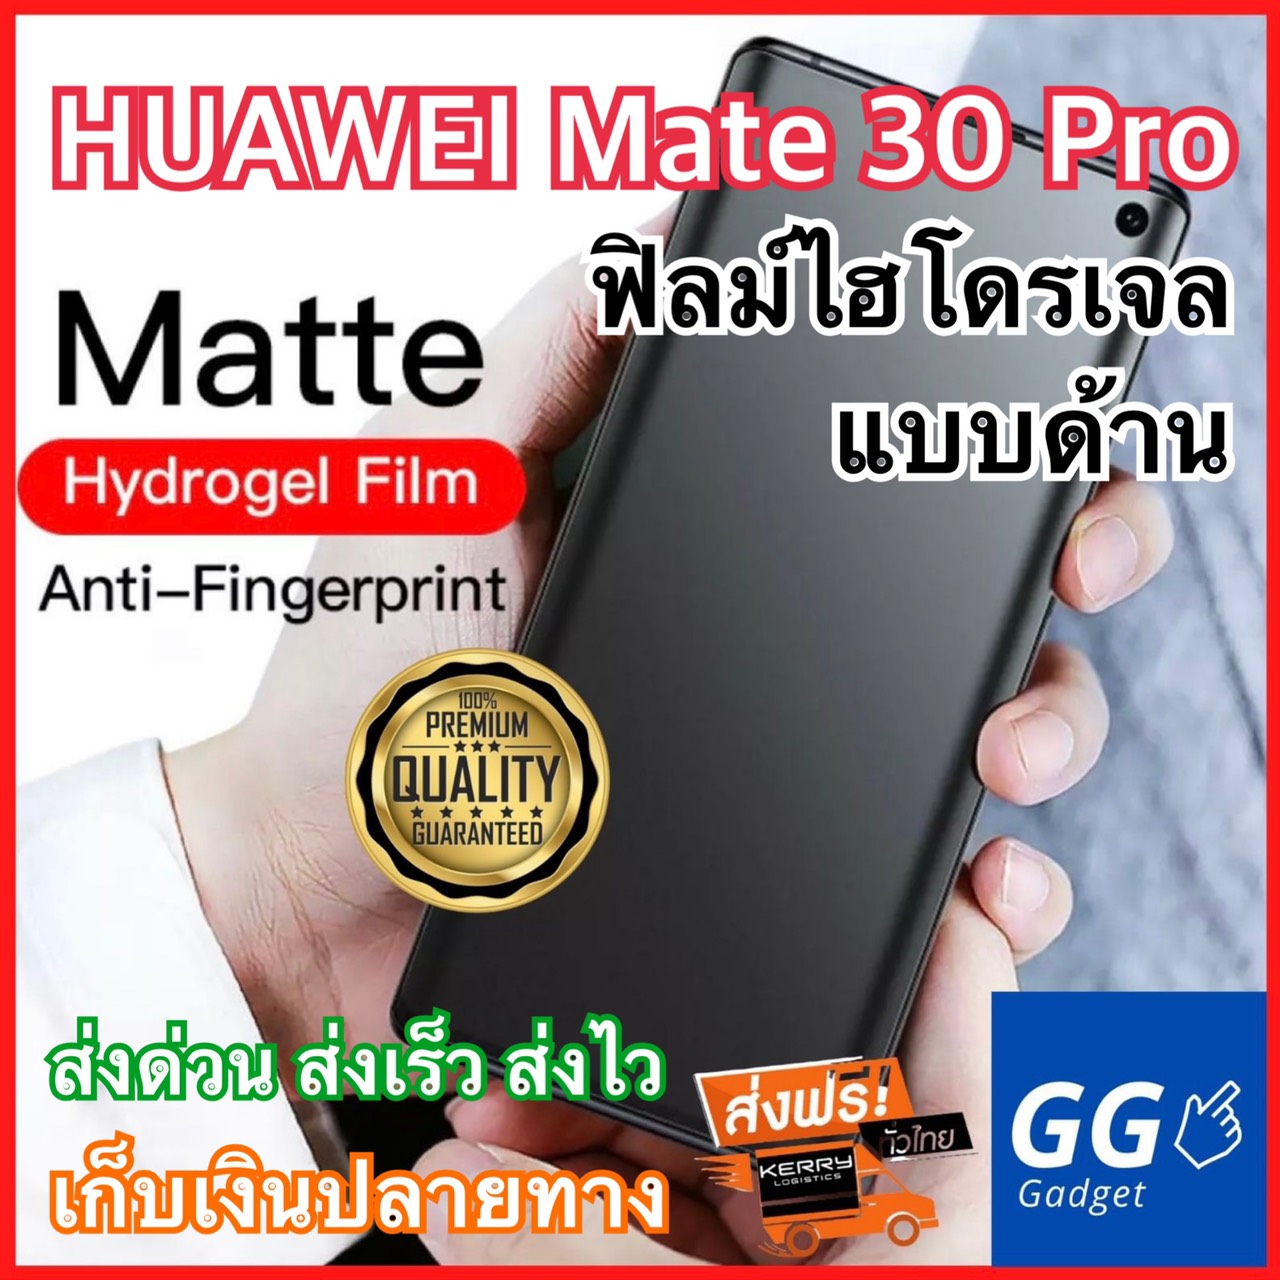 GGgadget ฟิล์มไฮโดรเจล แบบด้าน เต็มจอ บางคลุมขอบโค้ง ฟิล์มโค้ง กันรอย ลดแรงกระแทกจอ หัวเหว่ย เมท 30 โปร Full Cover Protection Matte Hydrogel film for Huawei Mate 30 Pro